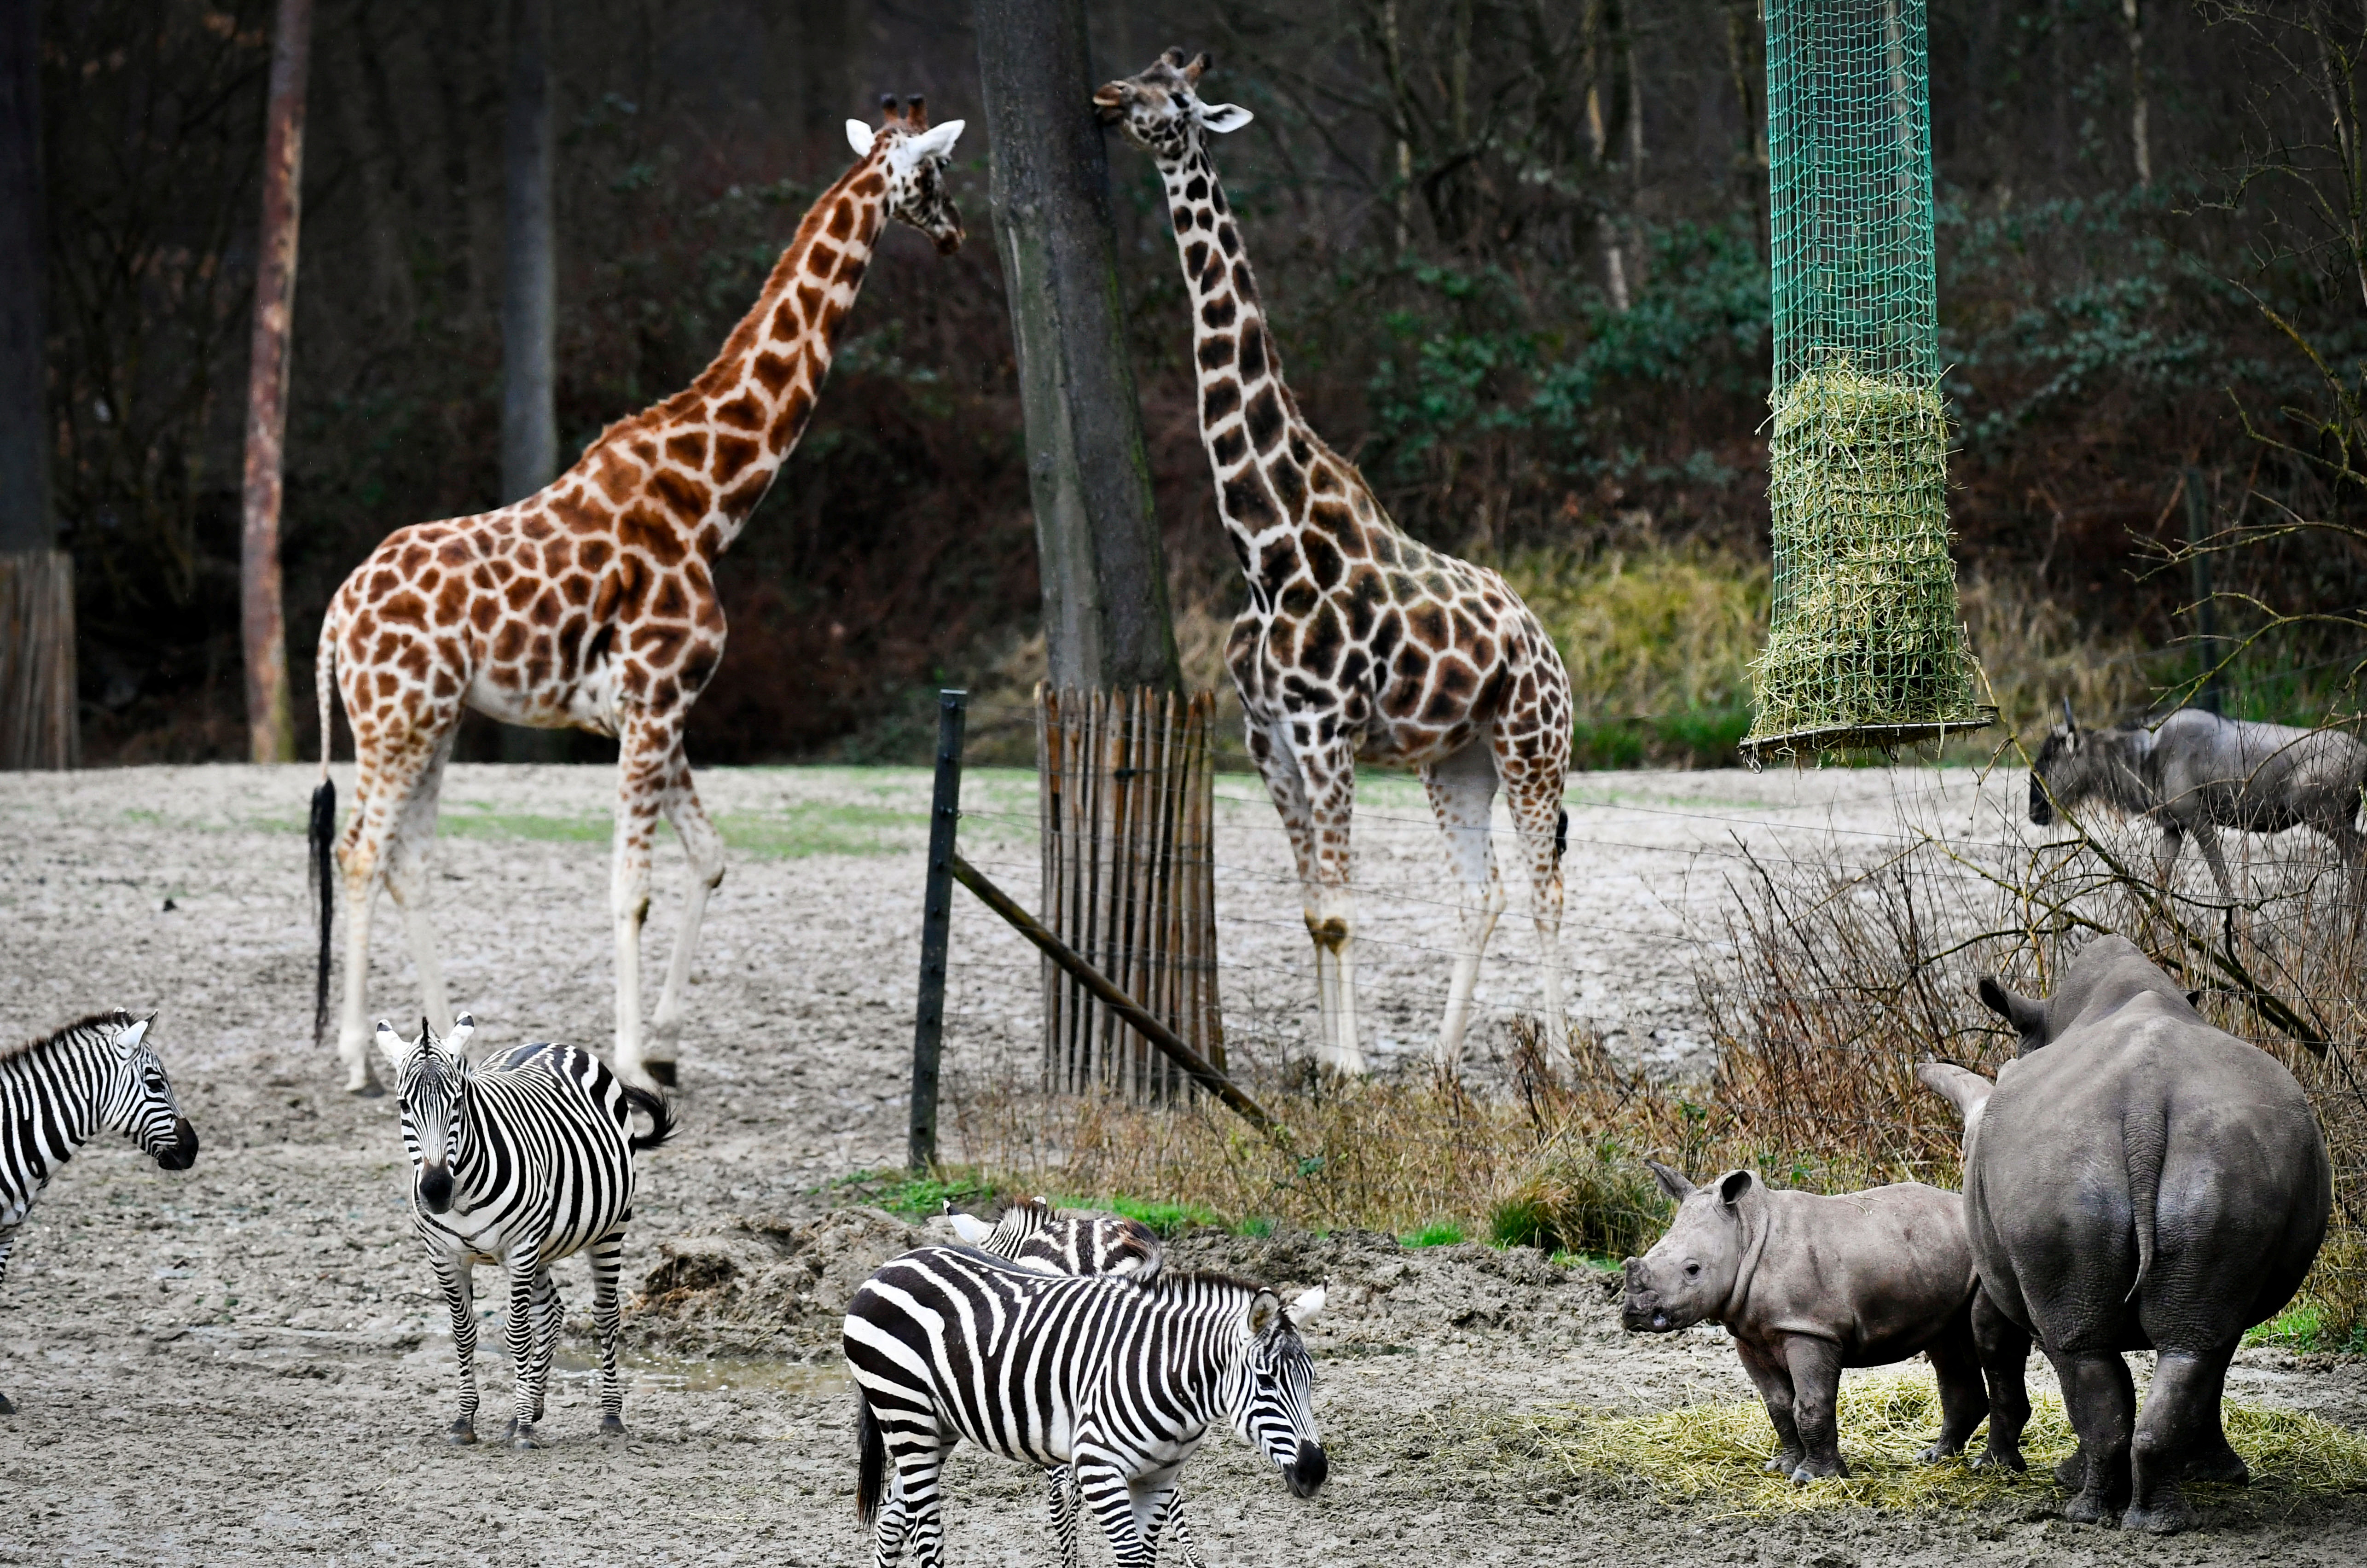 zebras and giraffes together